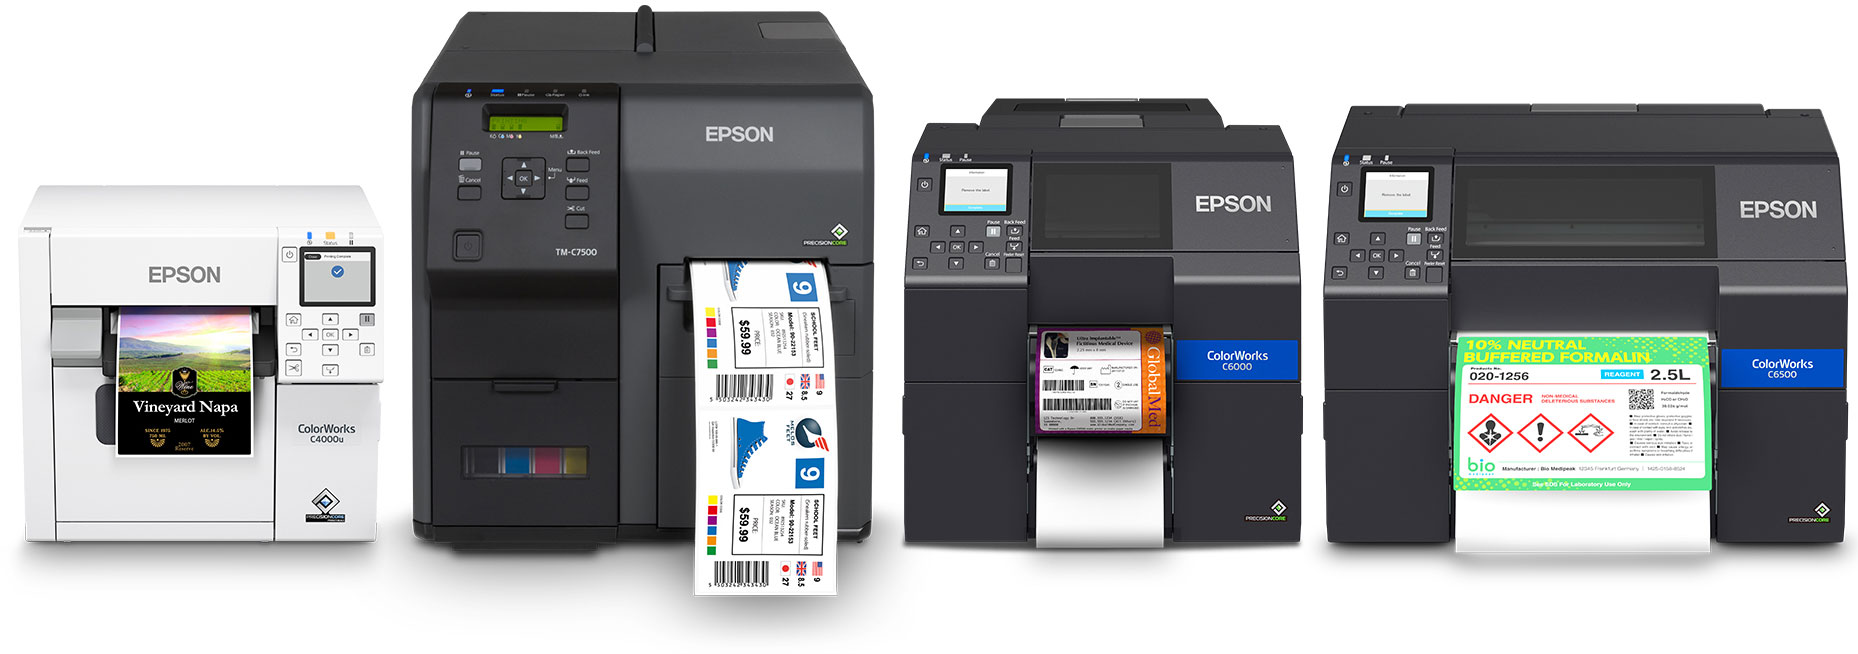 Epson printers series.